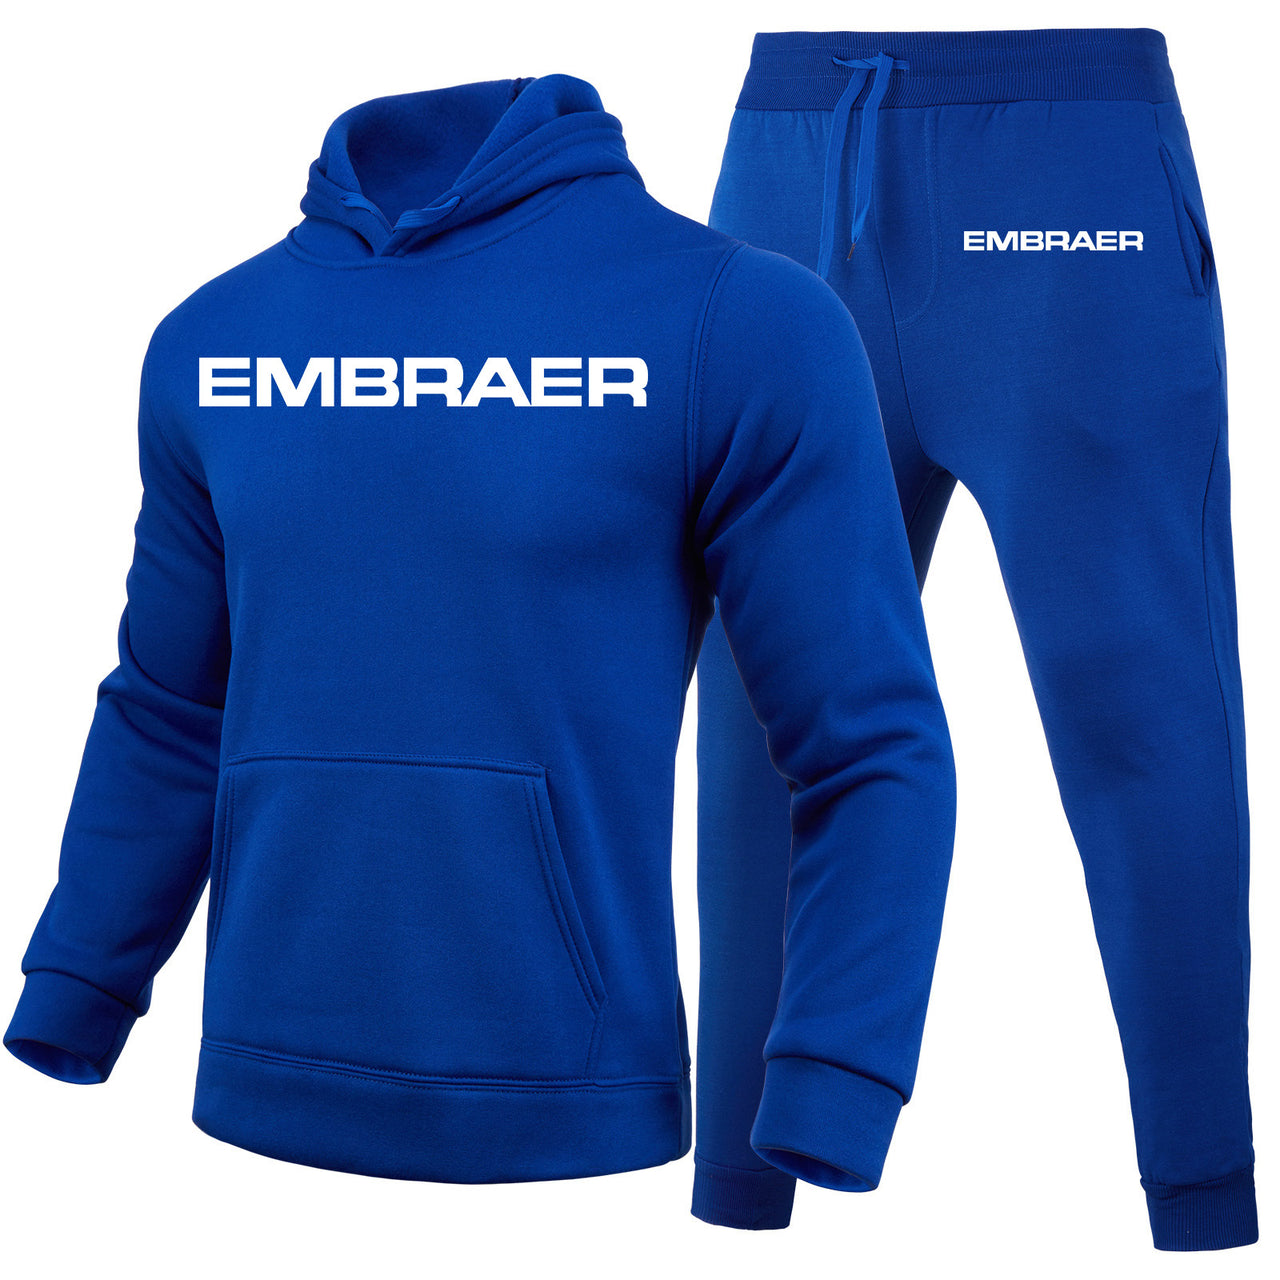 Embraer & Text Designed Hoodies & Sweatpants Set